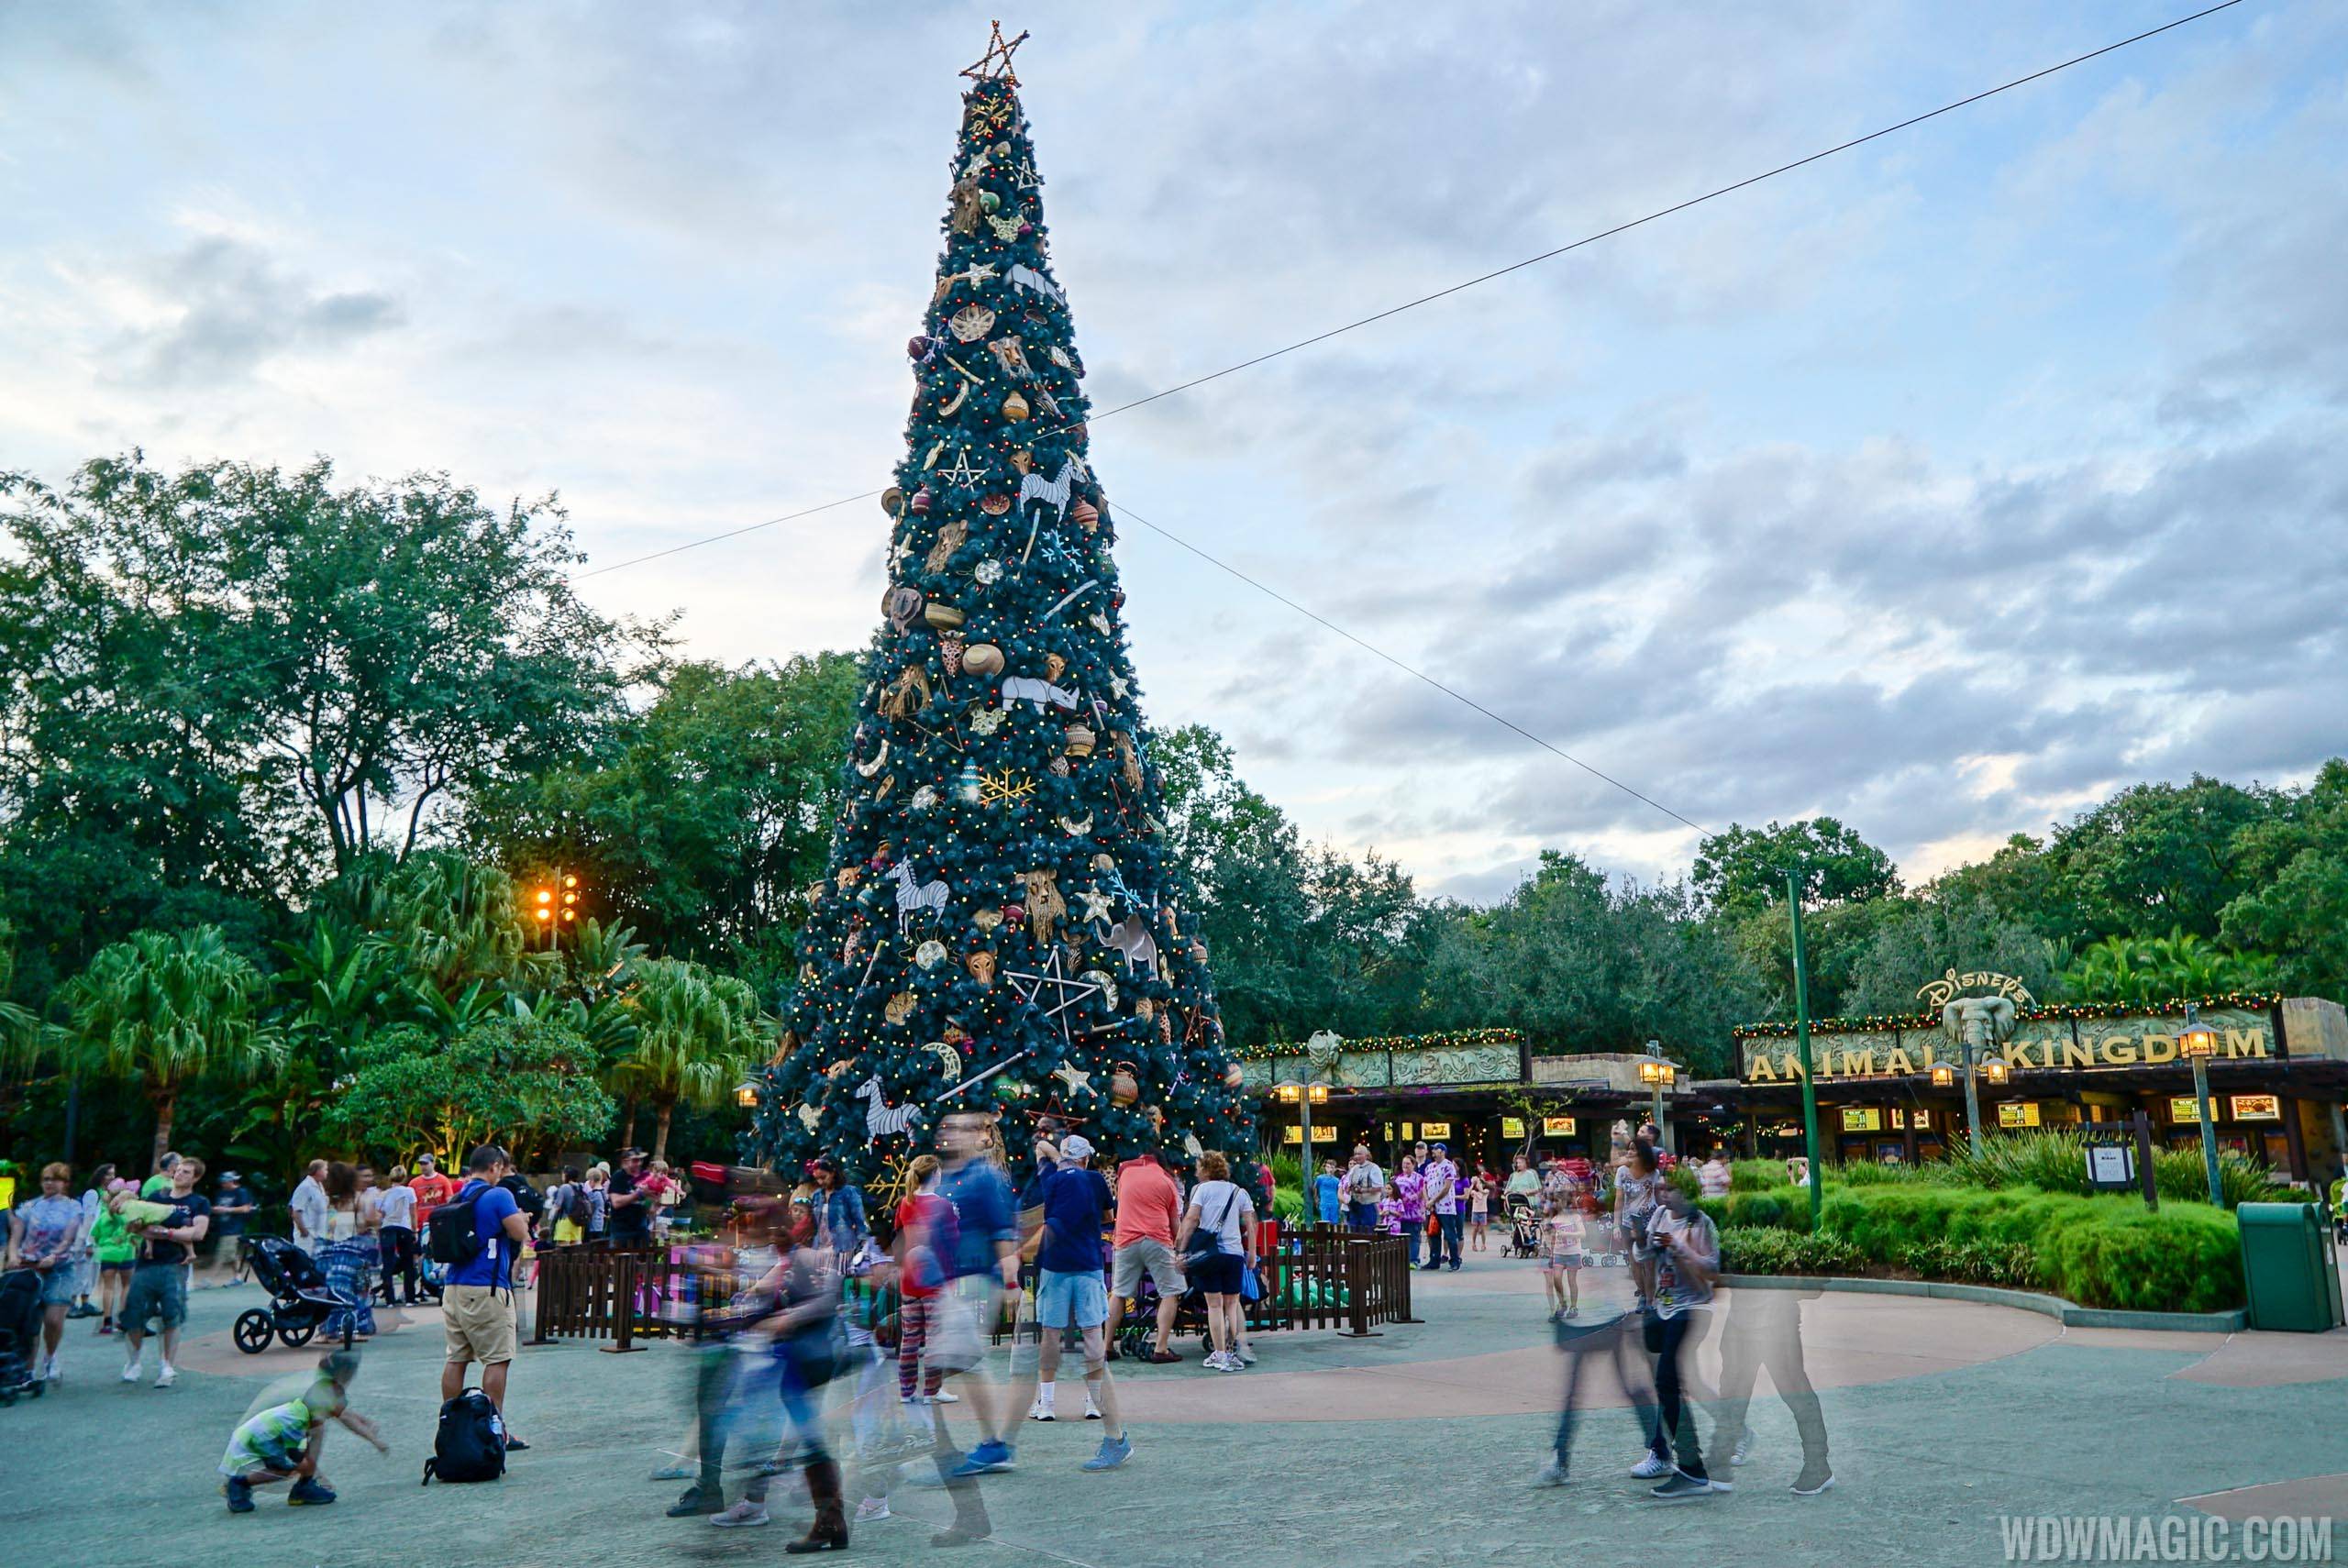 Disney's Animal Kingdom holiday decorations 2015